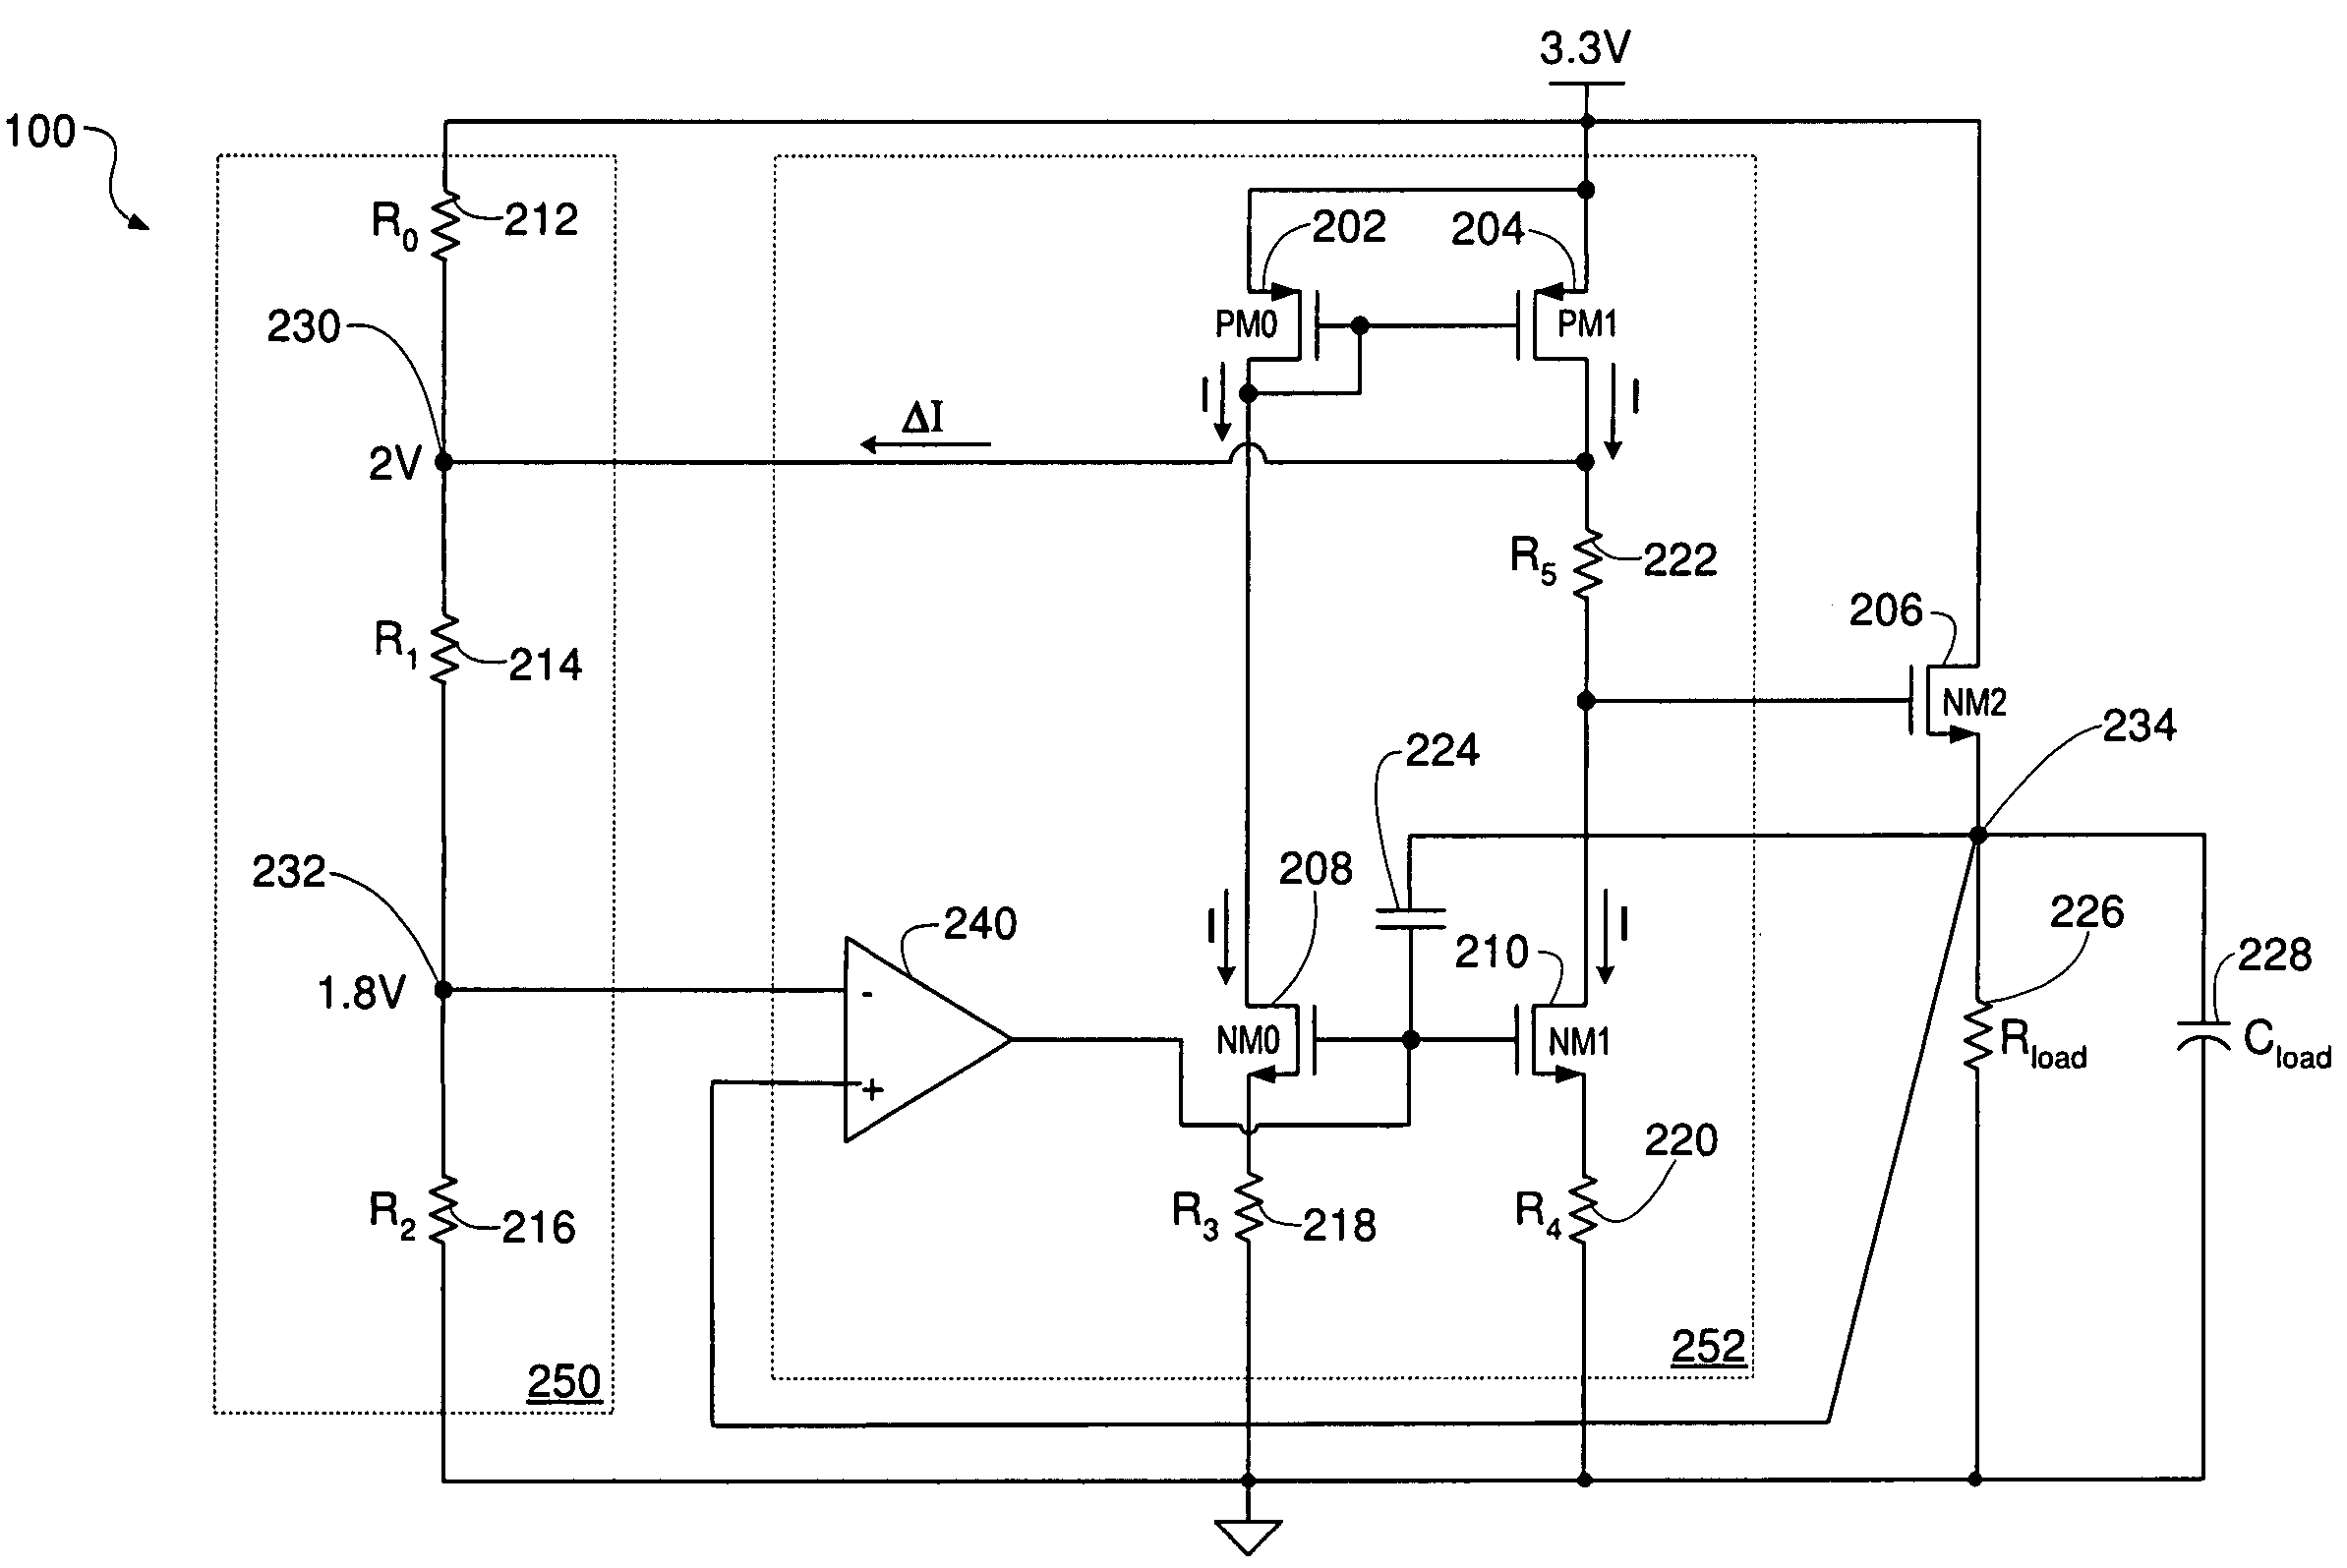 Voltage regulator with inherent voltage clamping